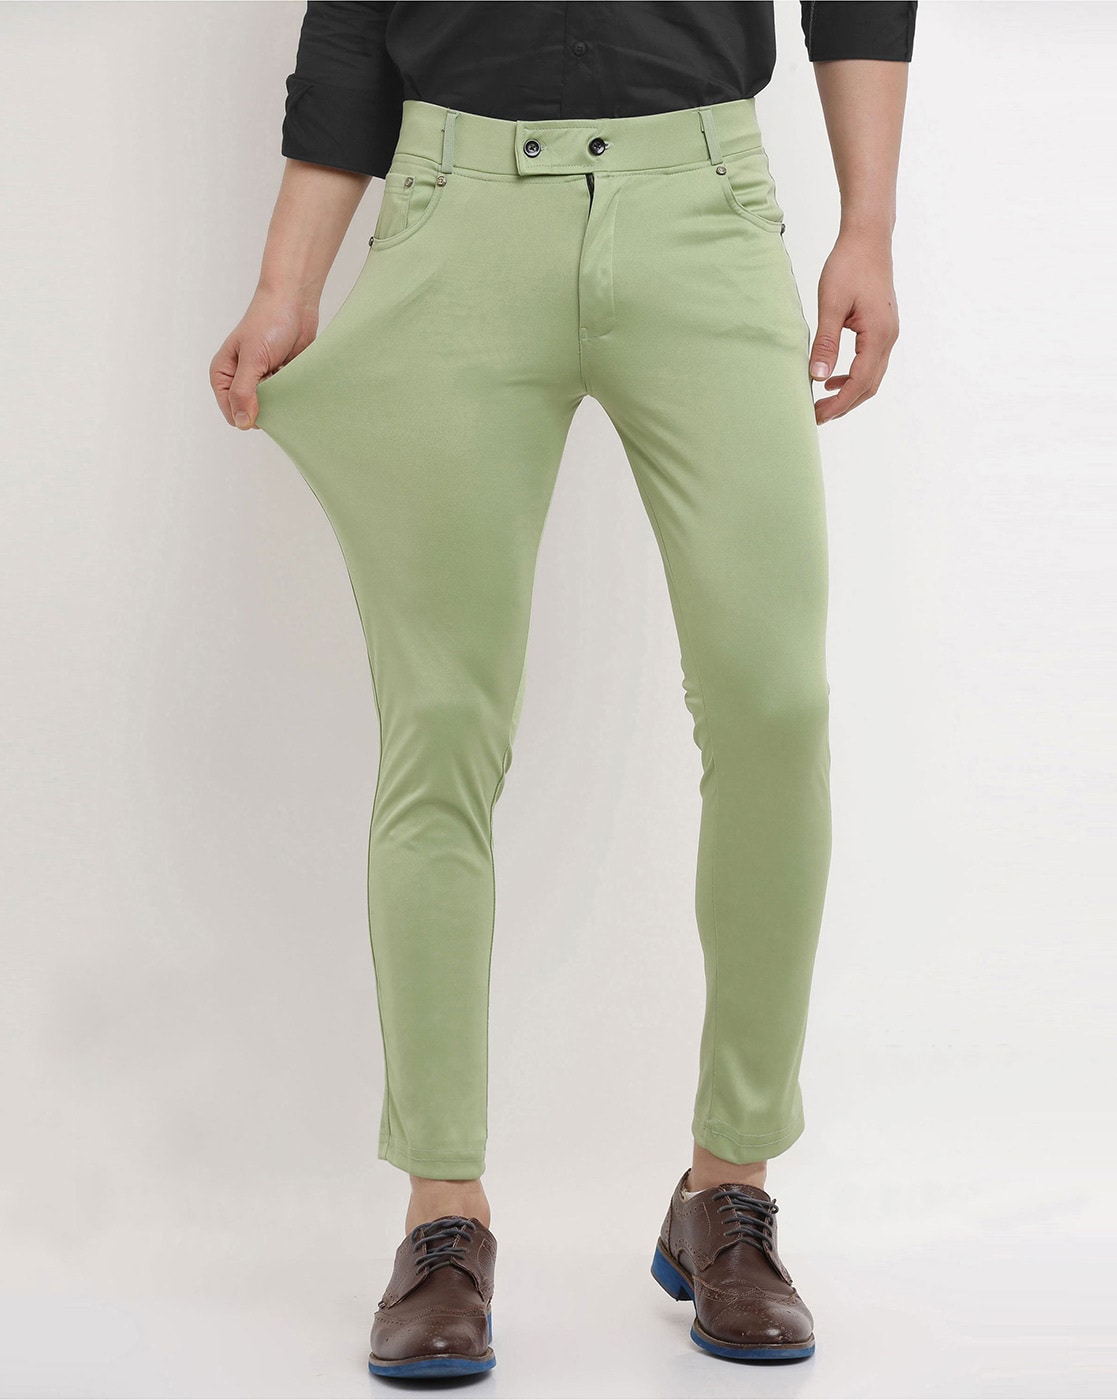 Light Green Active Hosiery Pants | Candy Active-6780-Light Green |  Cilory.com